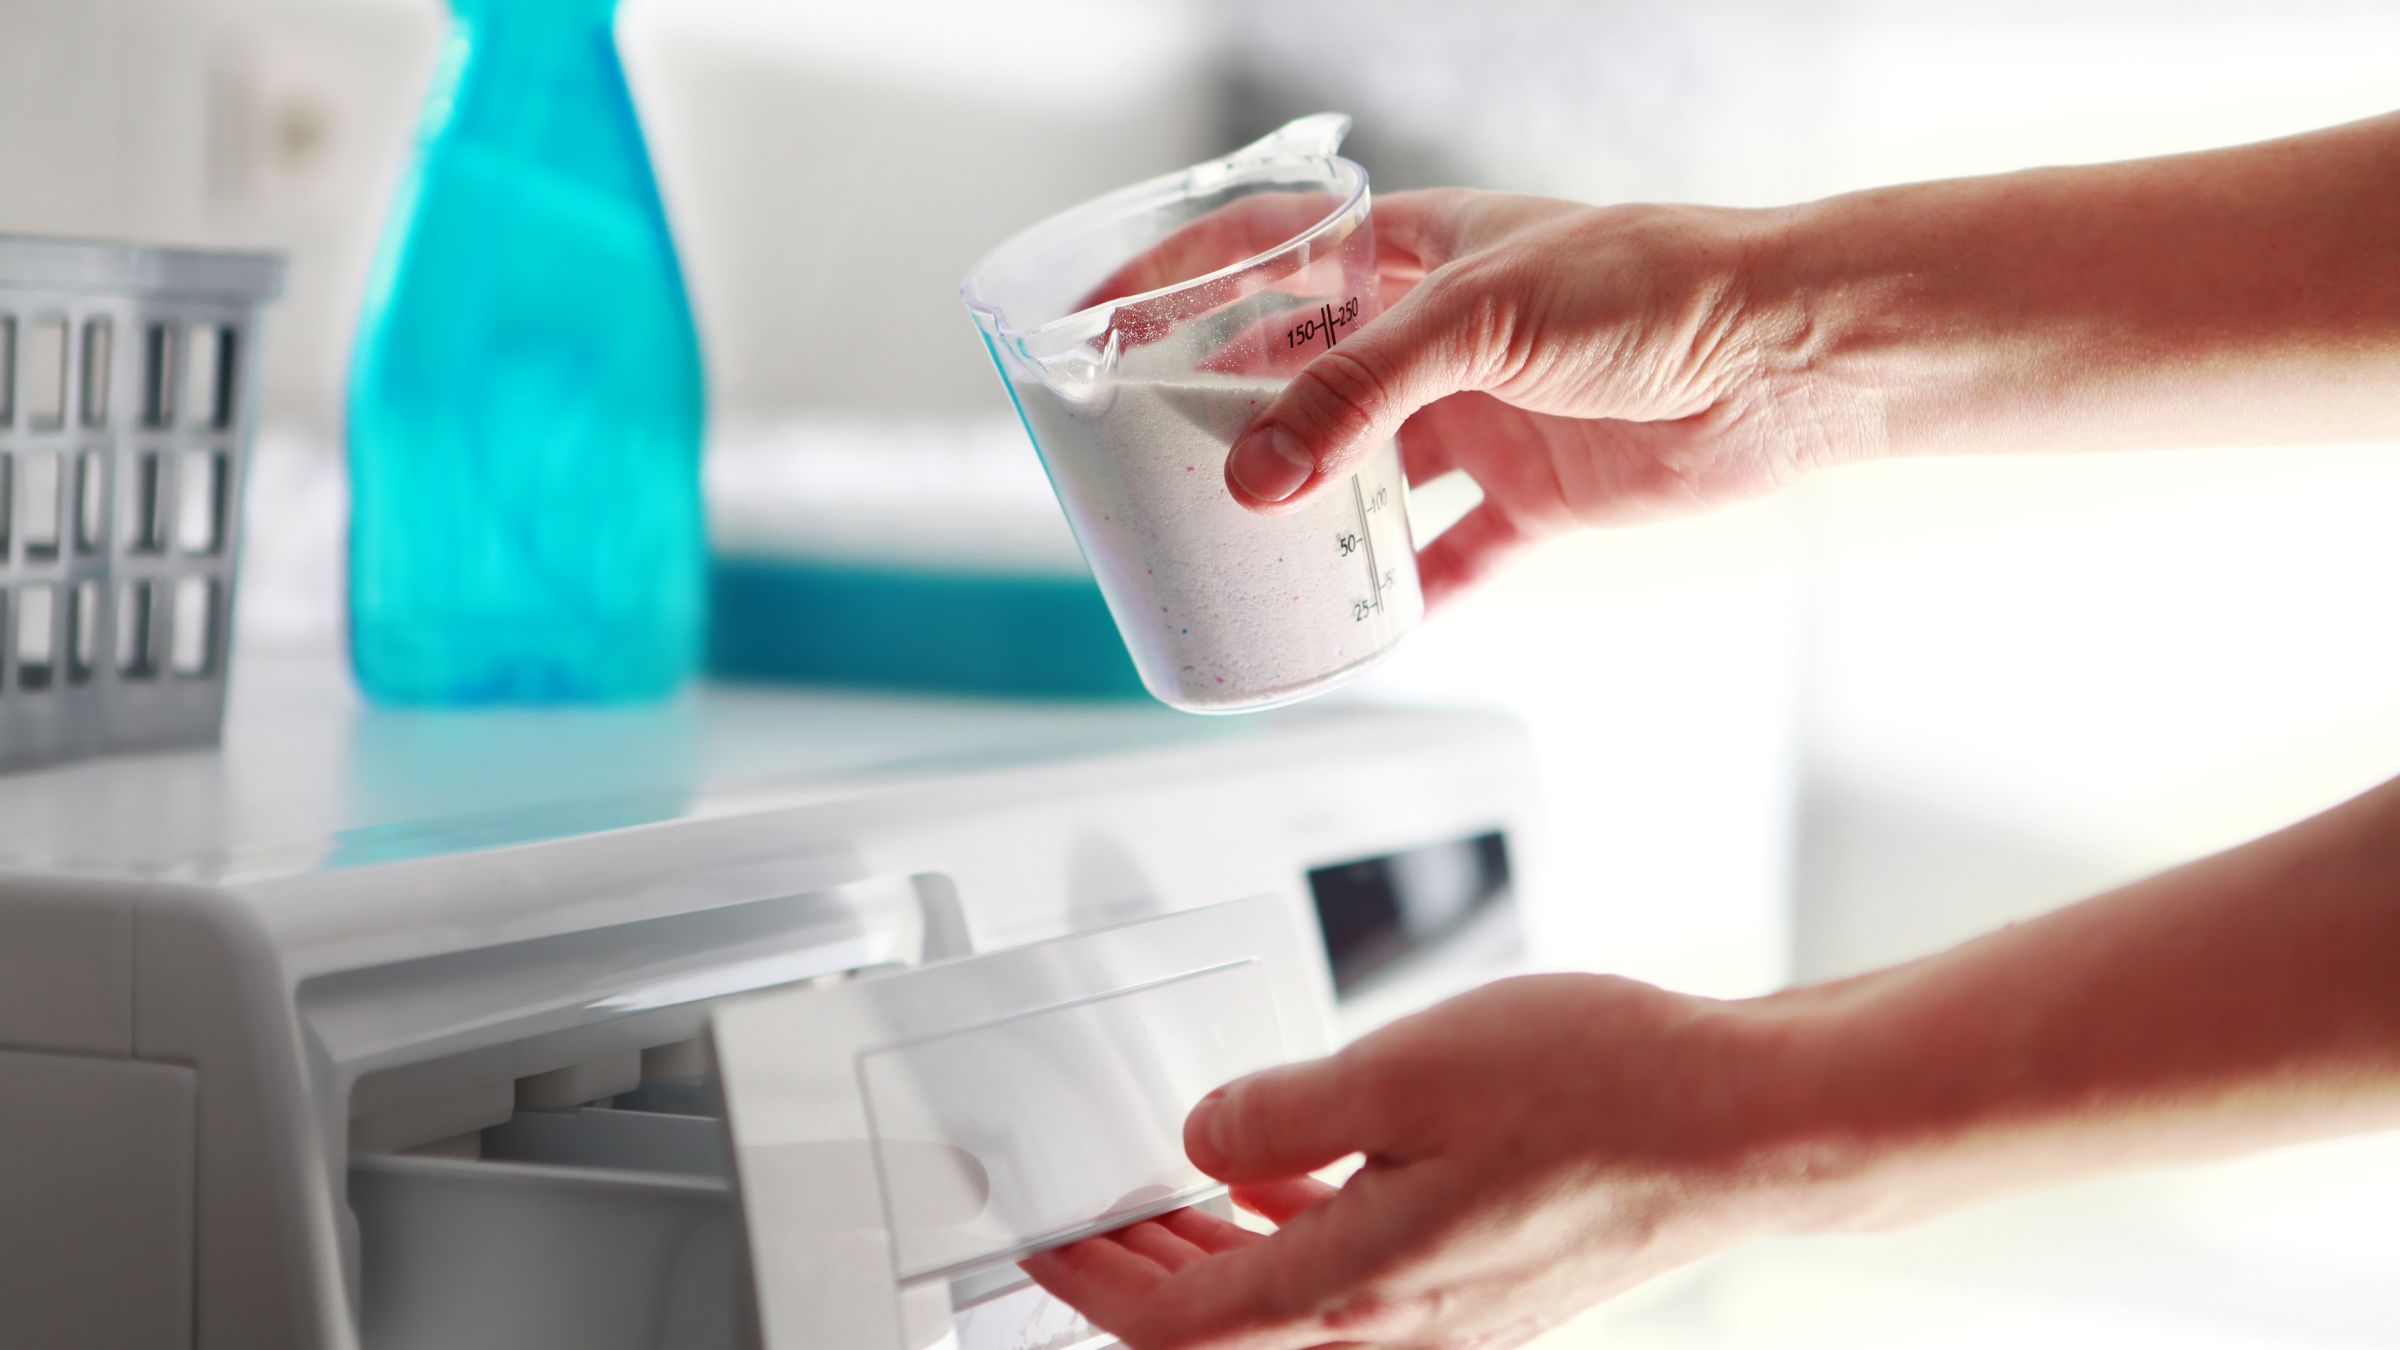 hands of woman that fills bio or non-bio detergent in the washing machine